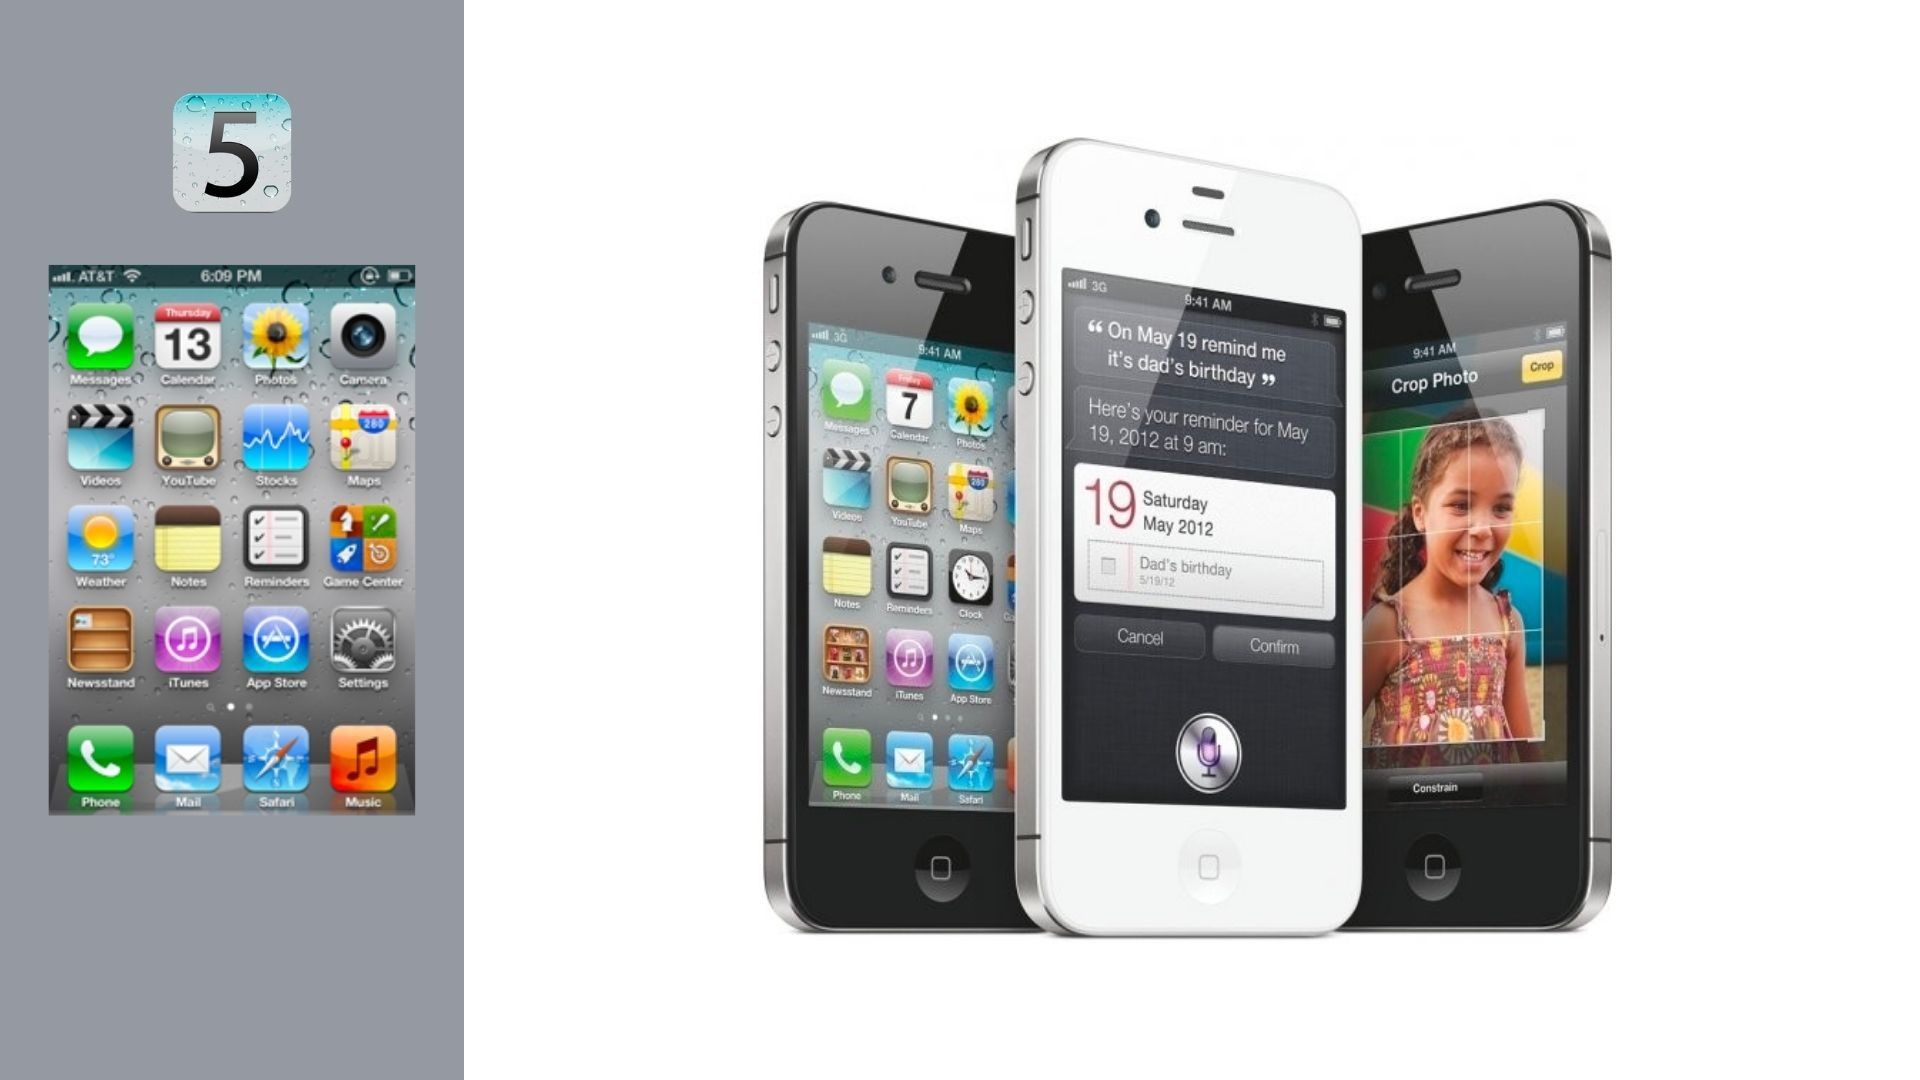 Apple iOS 5 on iPhone 4S